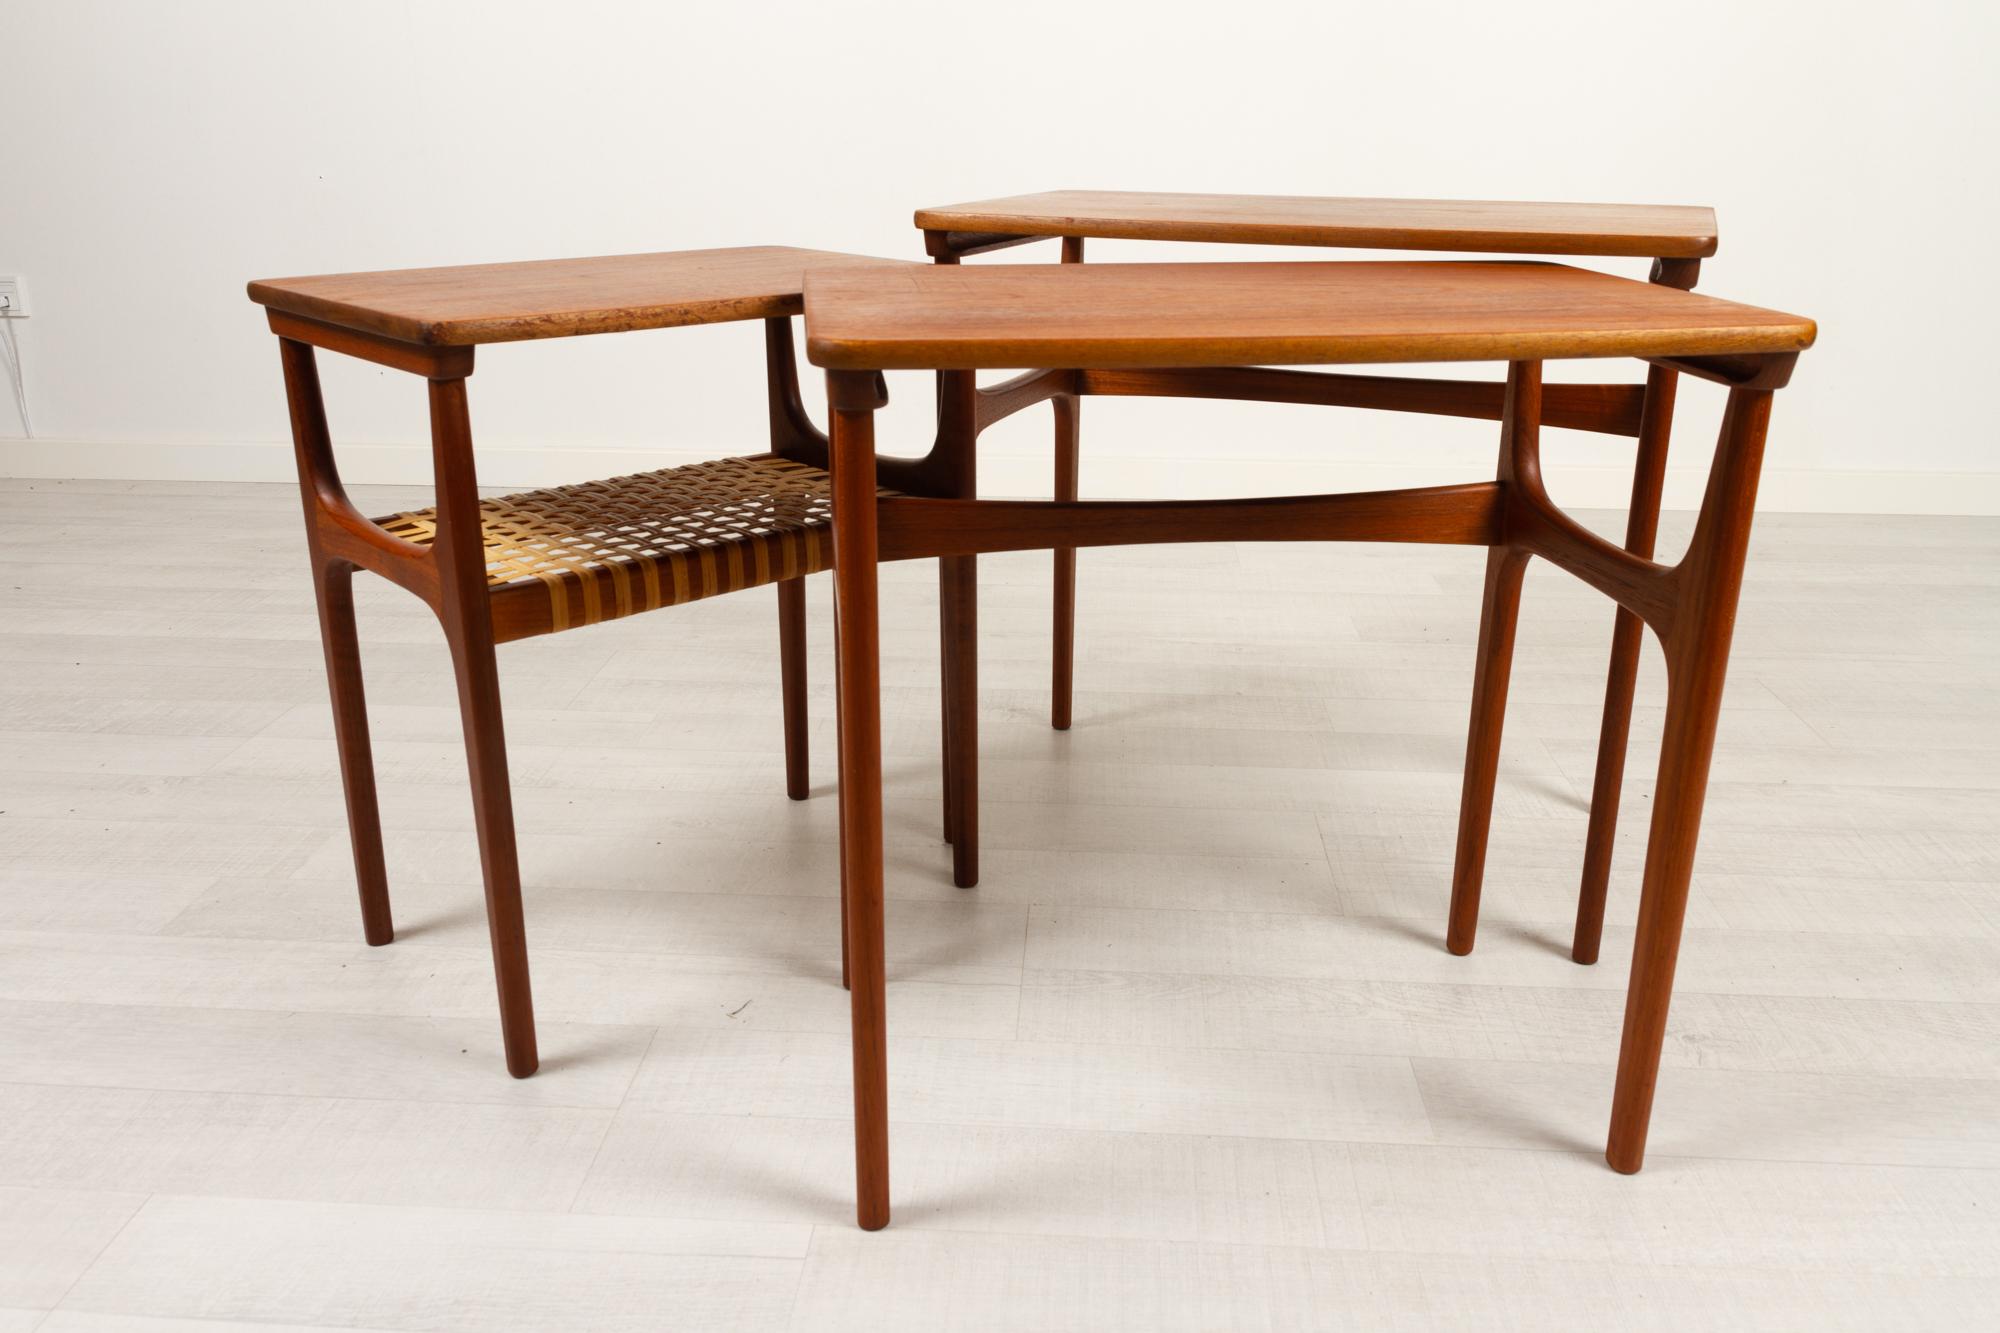 Vintage Danish Teak Nesting Tables by Erling Torvits for Heltborg Møbler 1950s In Good Condition For Sale In Asaa, DK